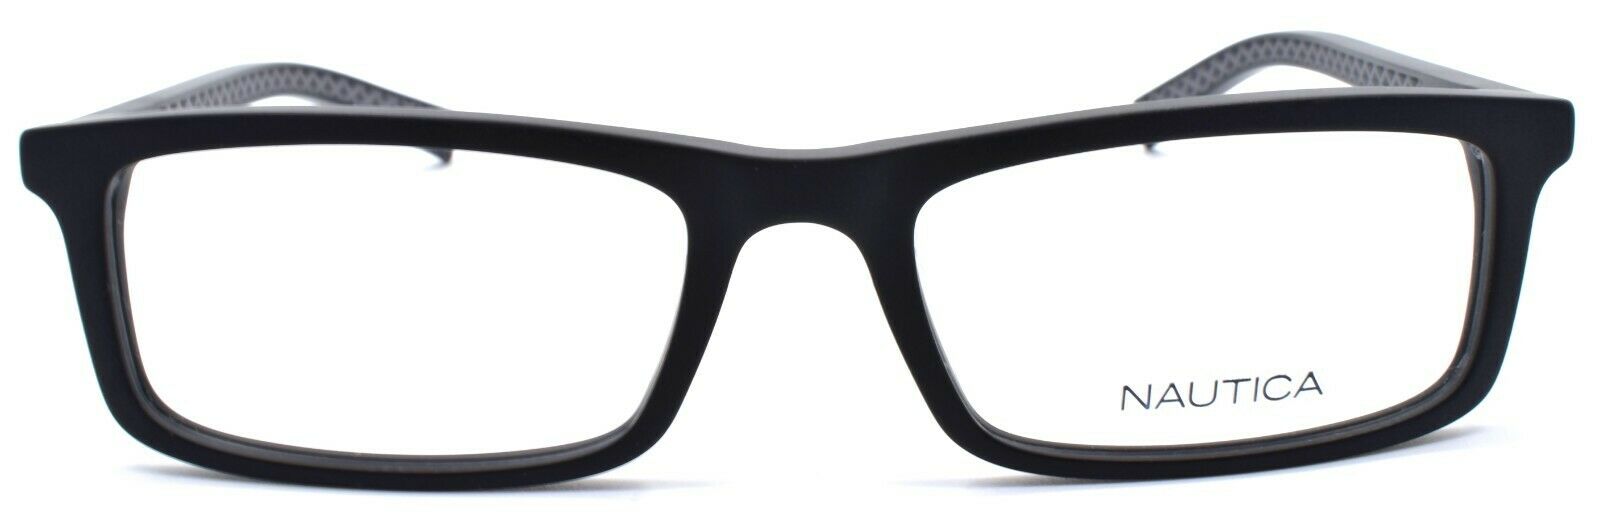 2-Nautica N8162 005 Men's Eyeglasses Frames 53-18-140 Matte Black-688940465440-IKSpecs